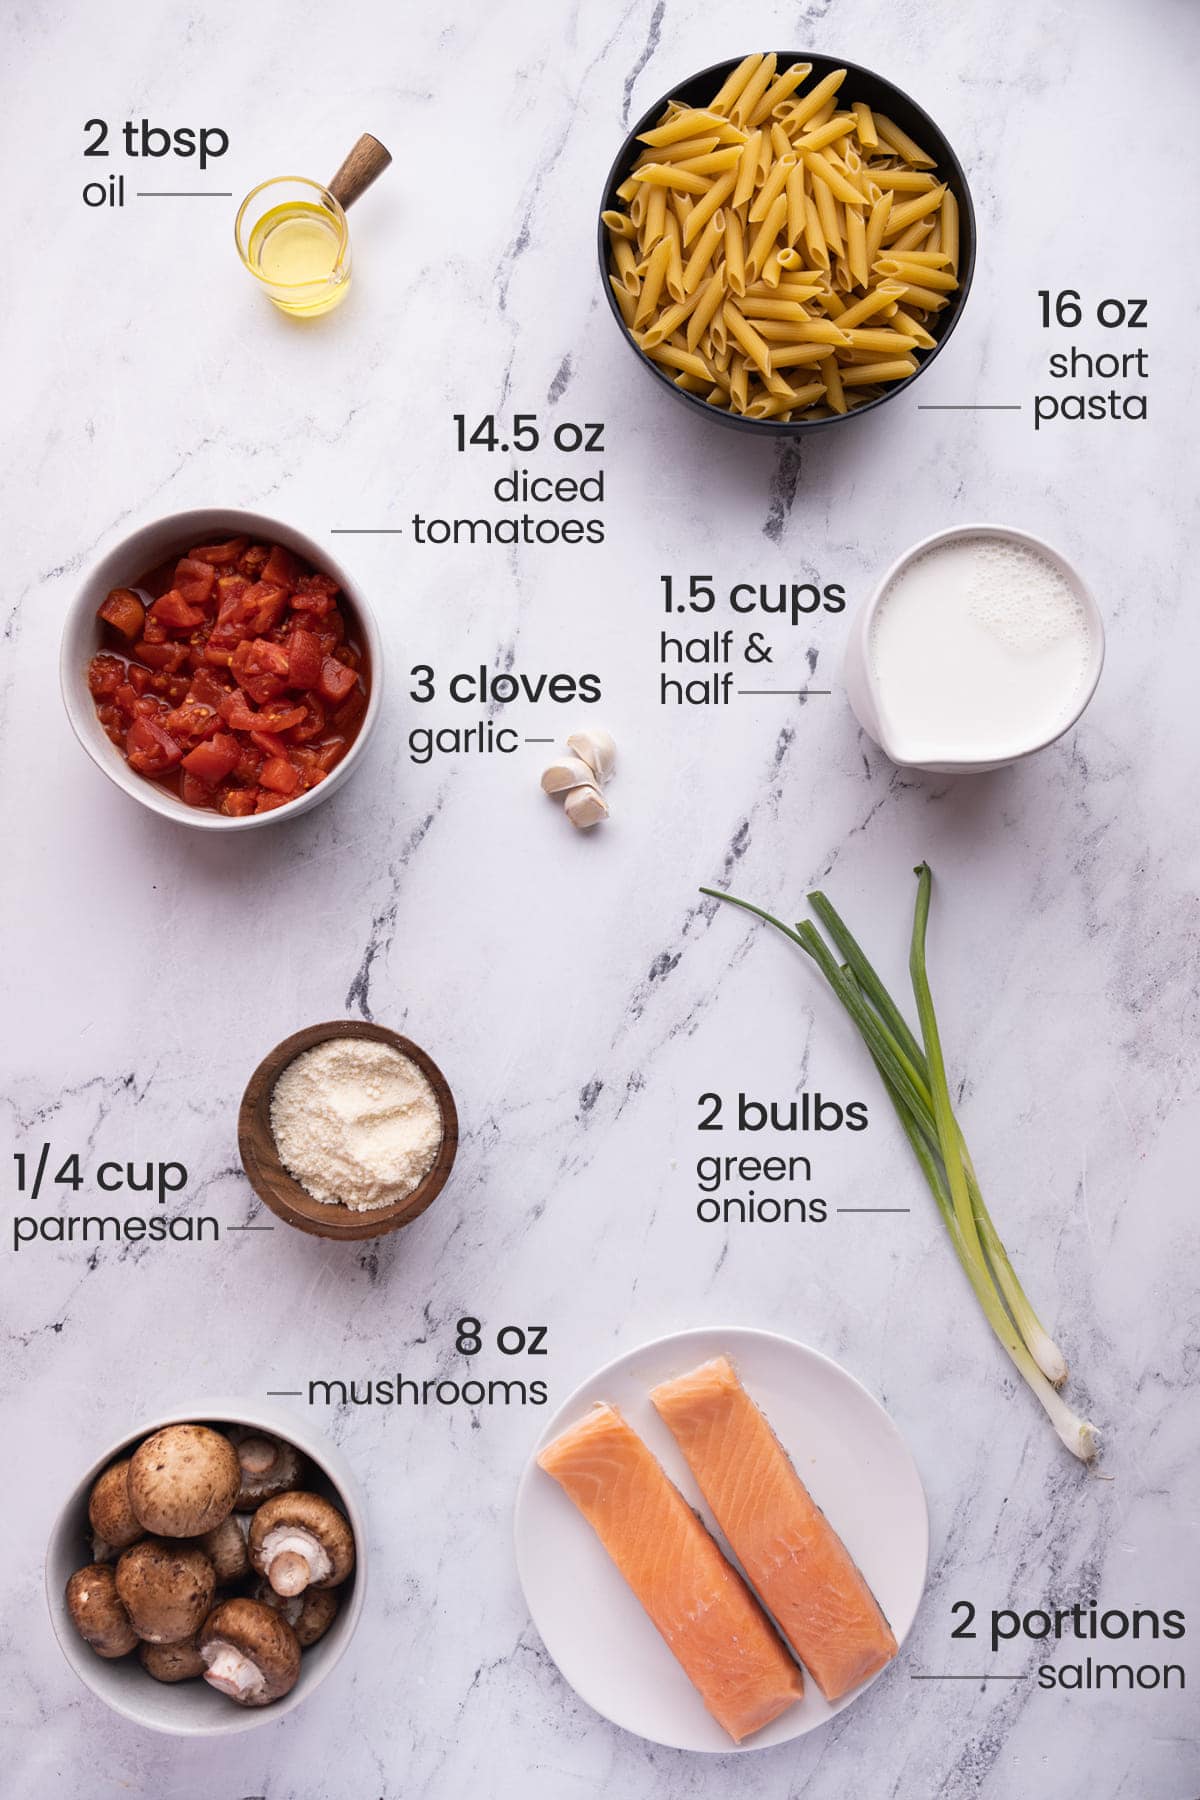 Blackened Salmon Pasta Ingredients - olive oil, short pasta, diced tomatoes, half and half, garlic, Parmesan, green onion, mushrooms, salmon